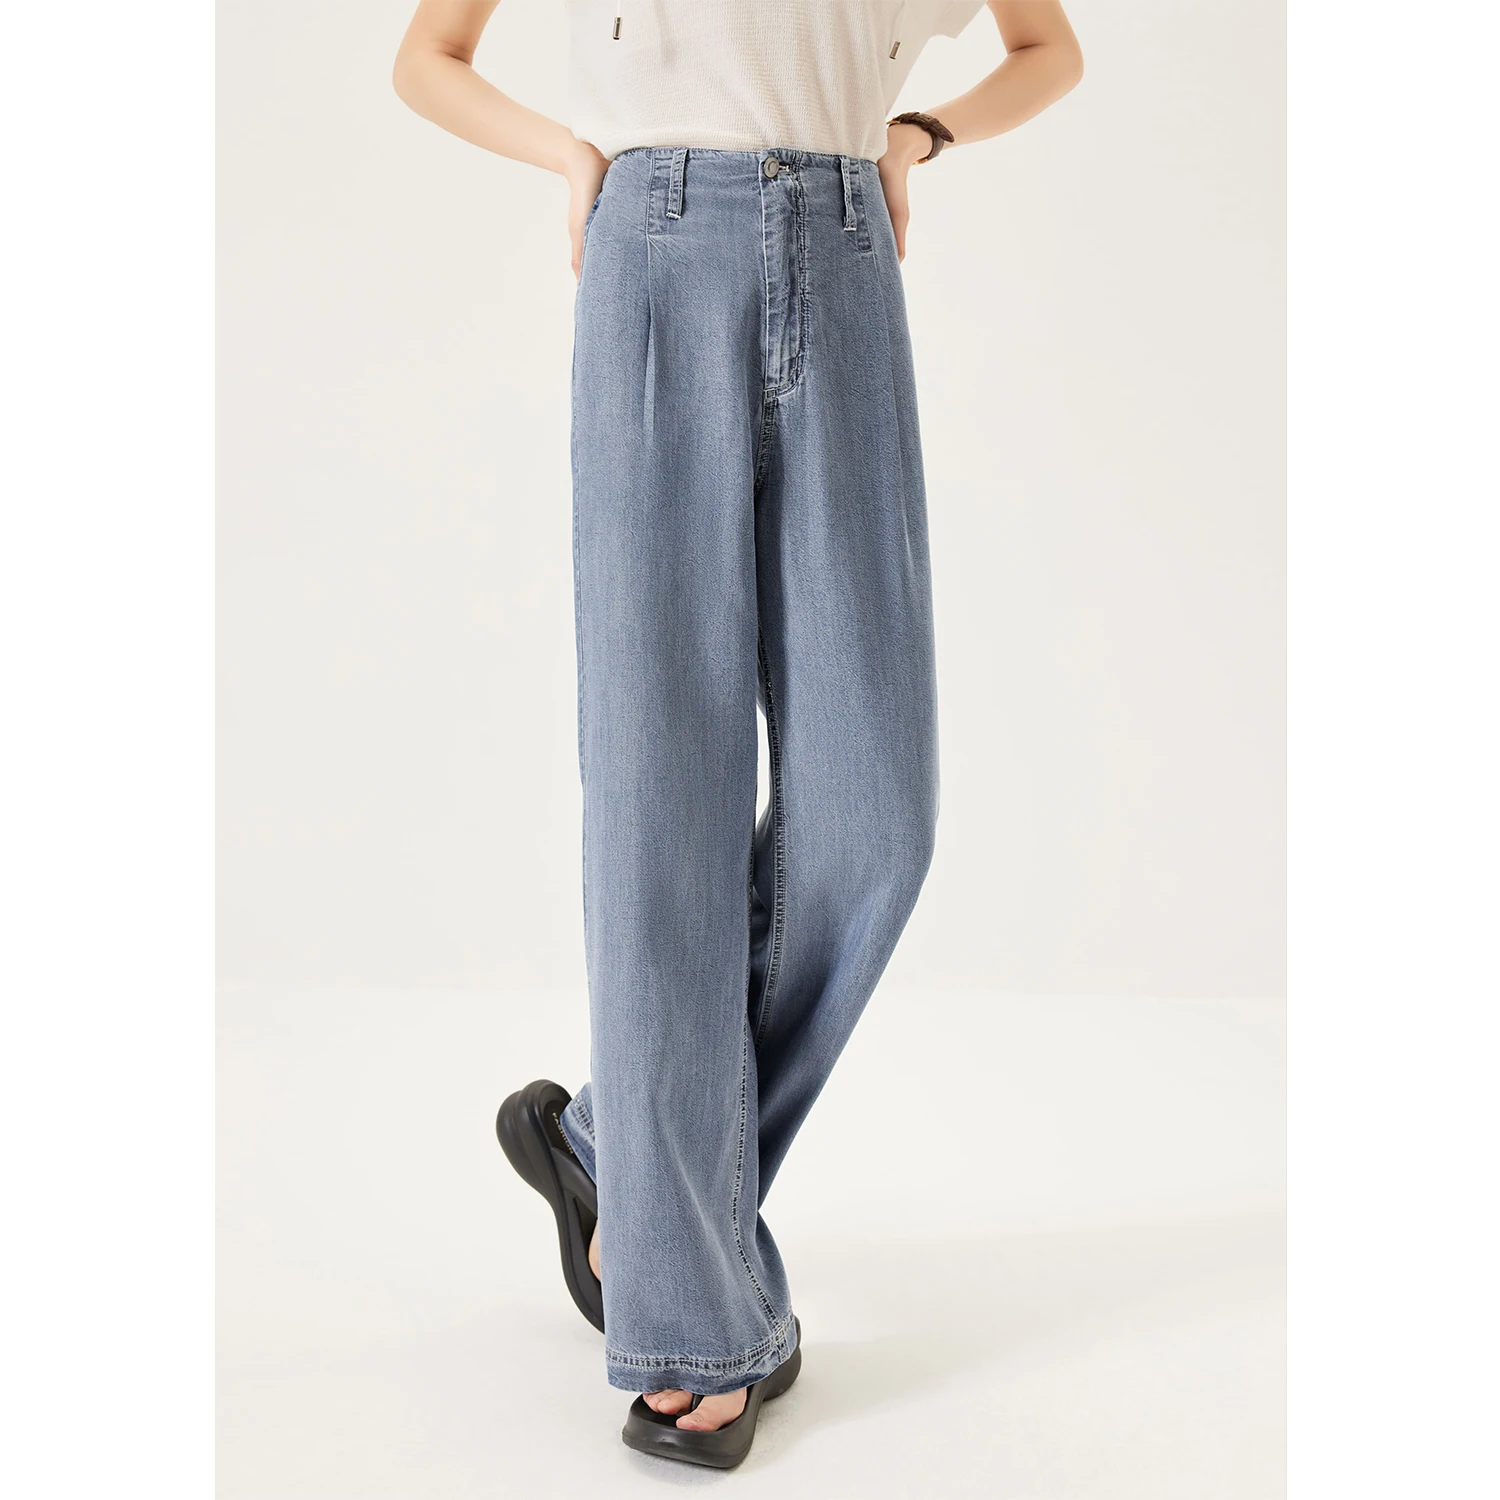 New Lyocell  Streetwear  Mom Jeans  Pantalon Pour Femme  Full Length  HIGH Waist STRAIGHT  High Street  Women Jeans